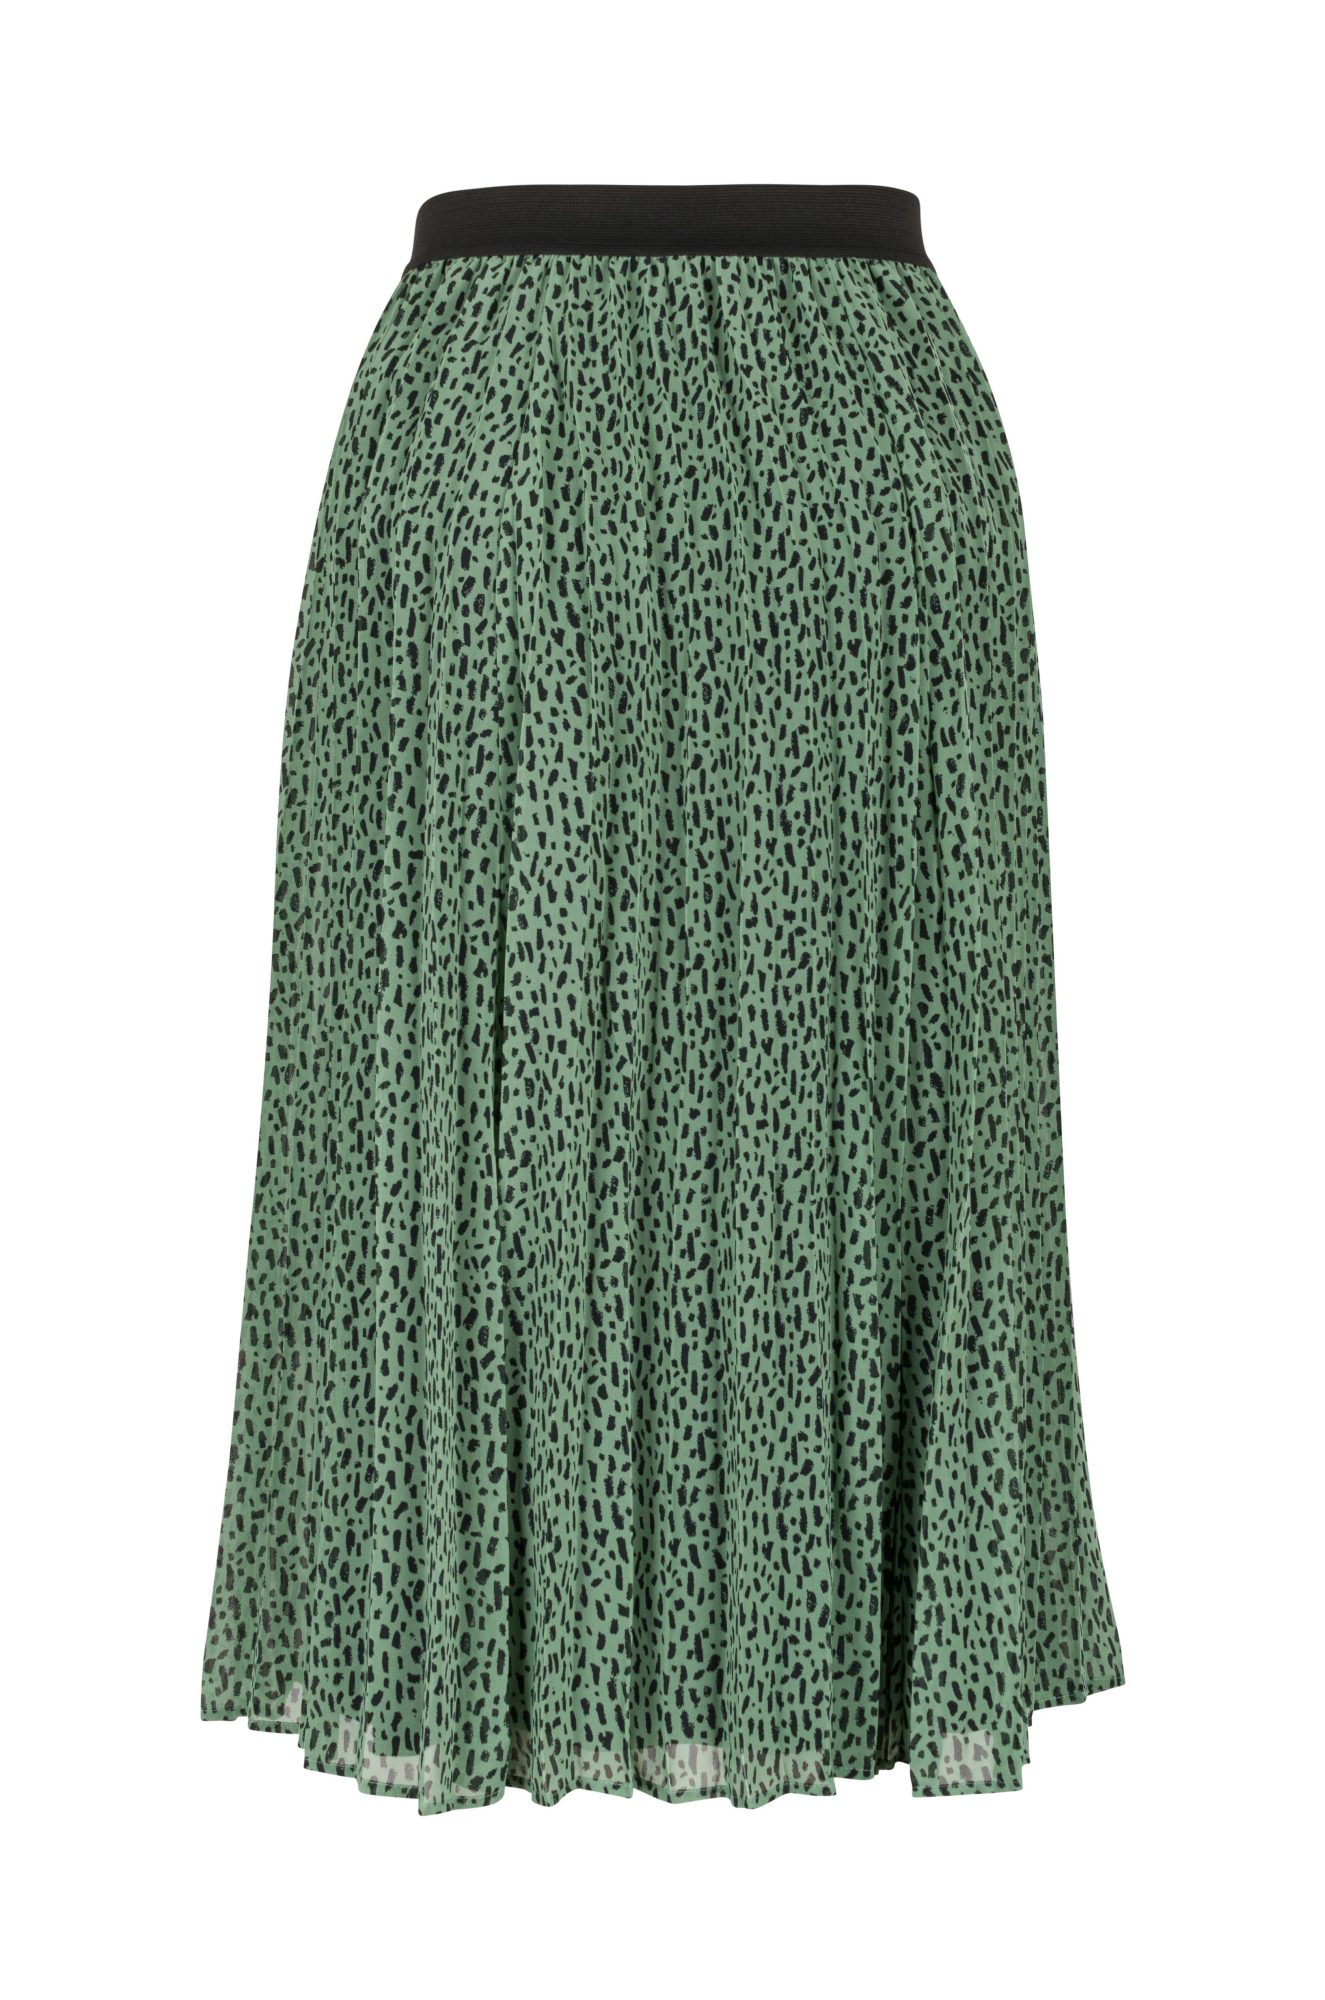 Printed & pleated Chiffon Skirt | SAGE BLACK DASH | 0101ZR ...